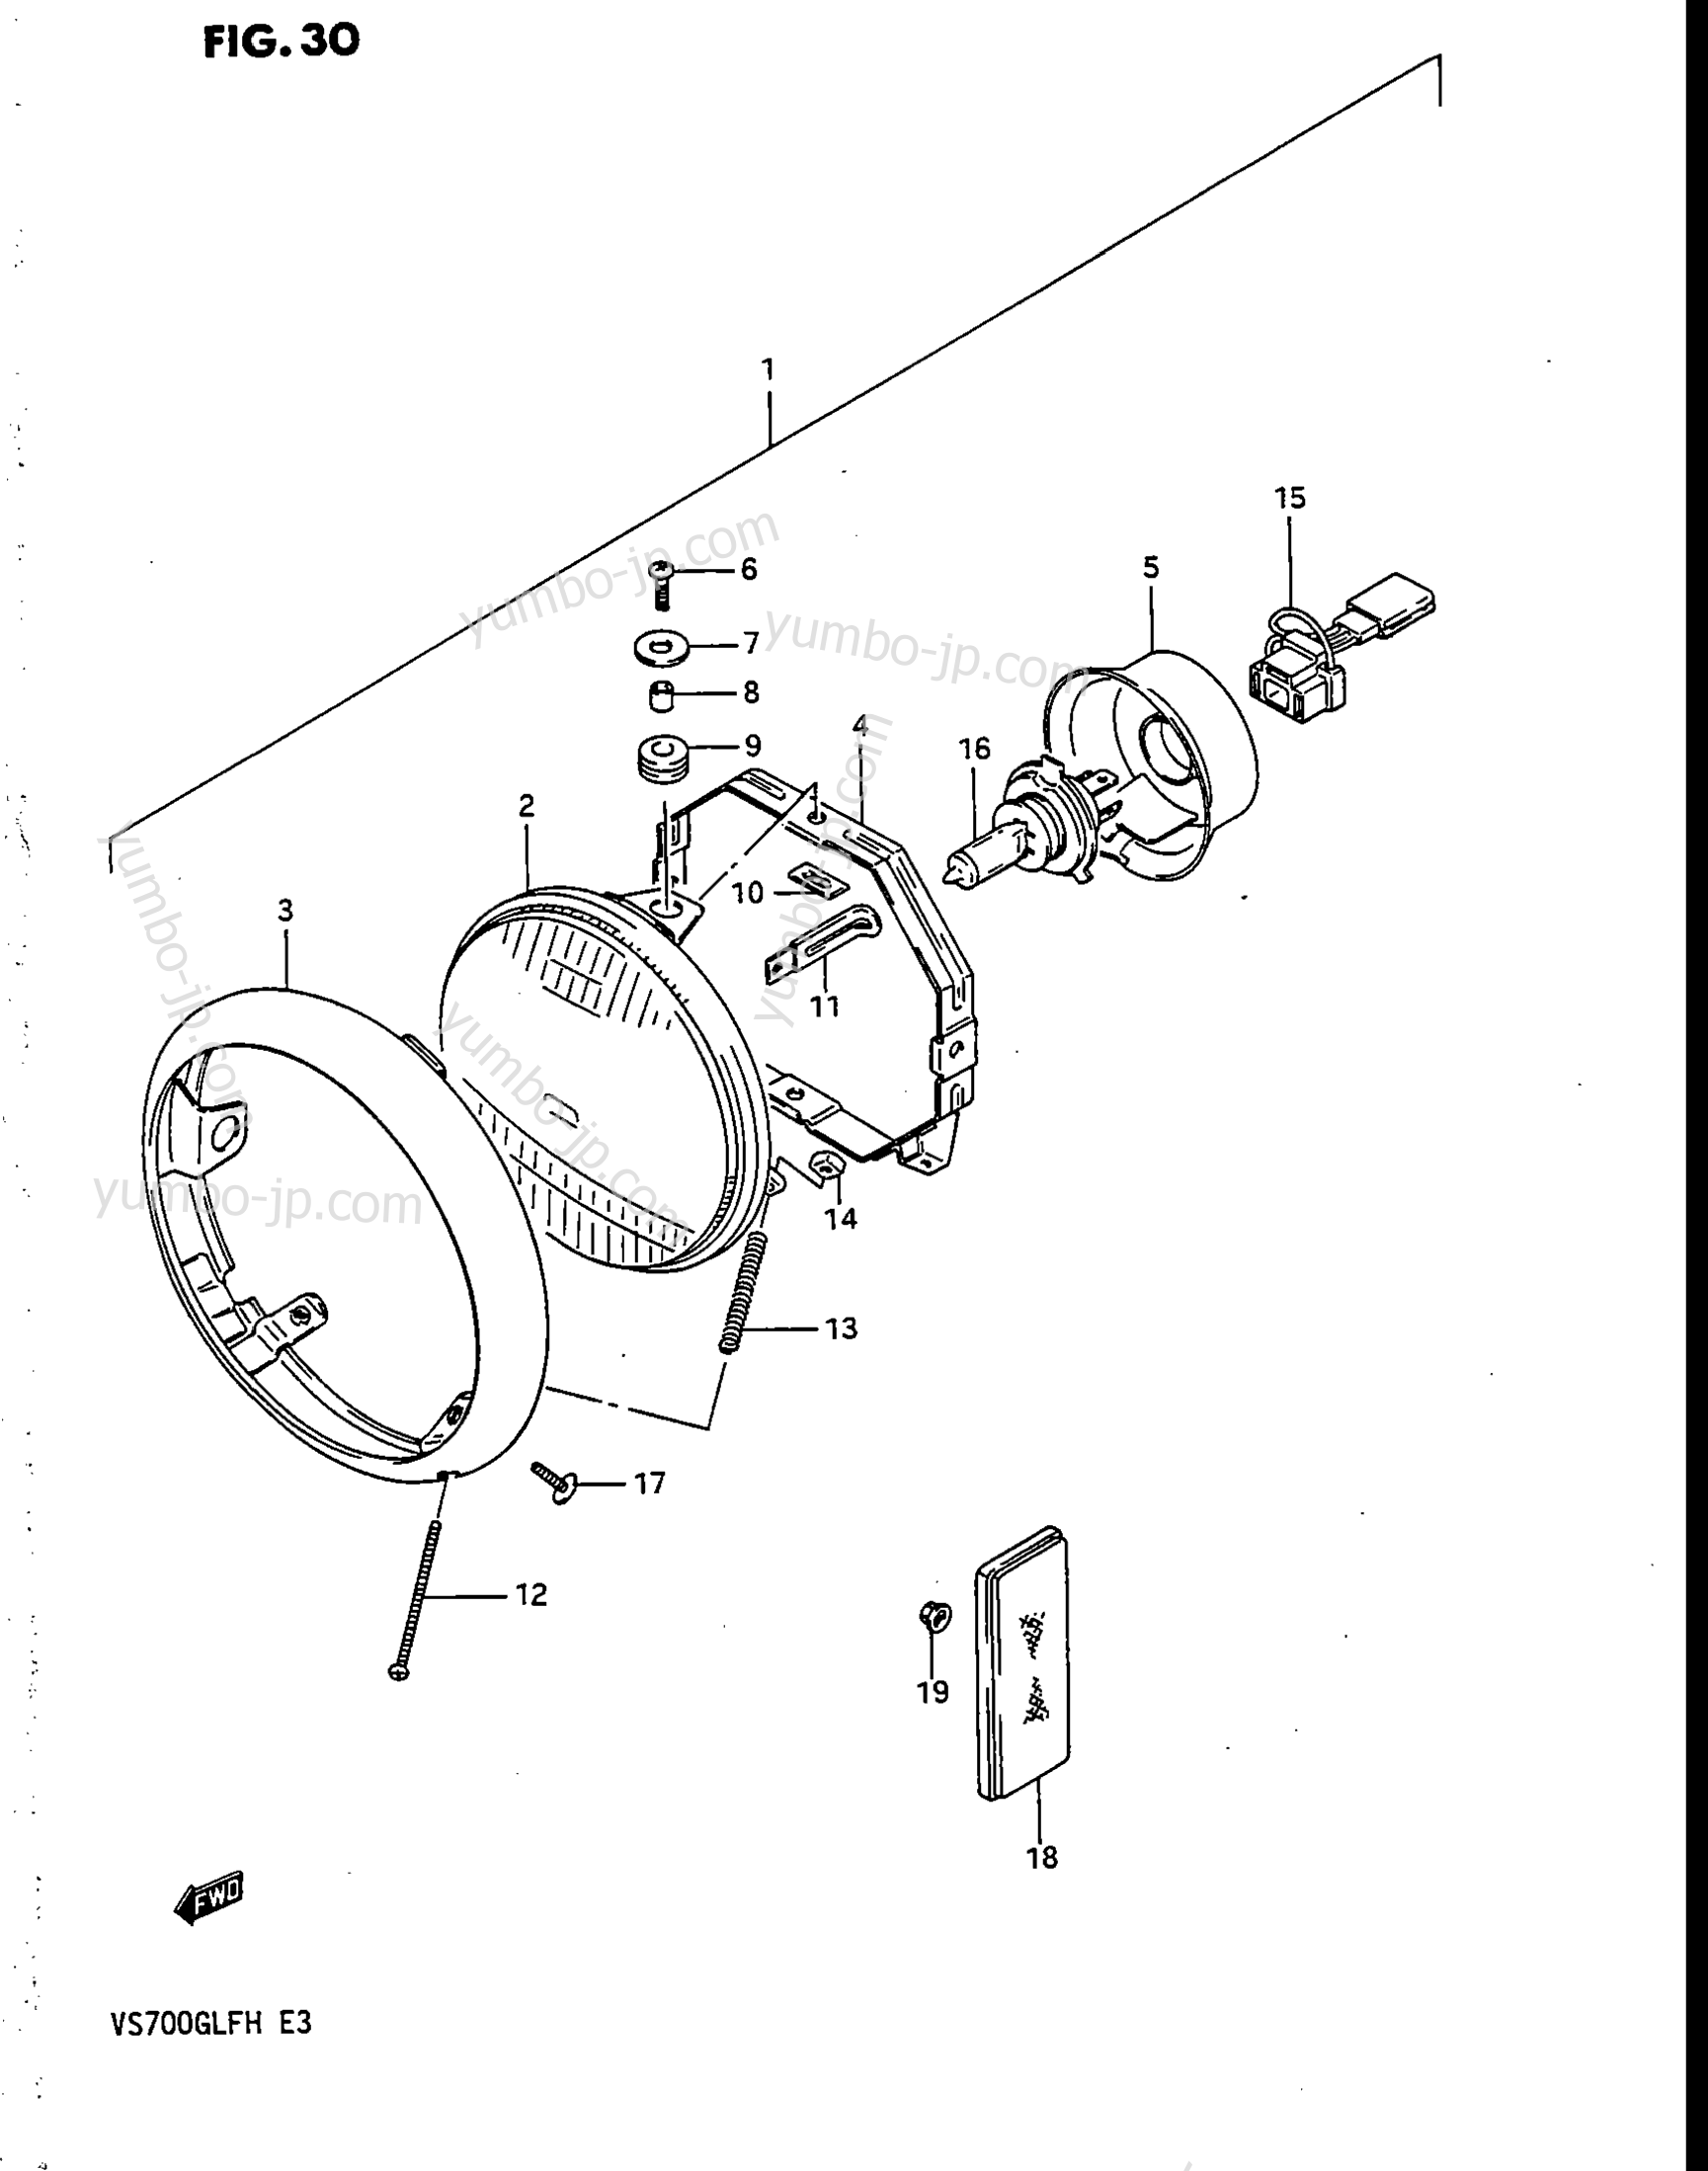 HEADLAMP for motorcycles SUZUKI Intruder (VS700GLF) 1986 year